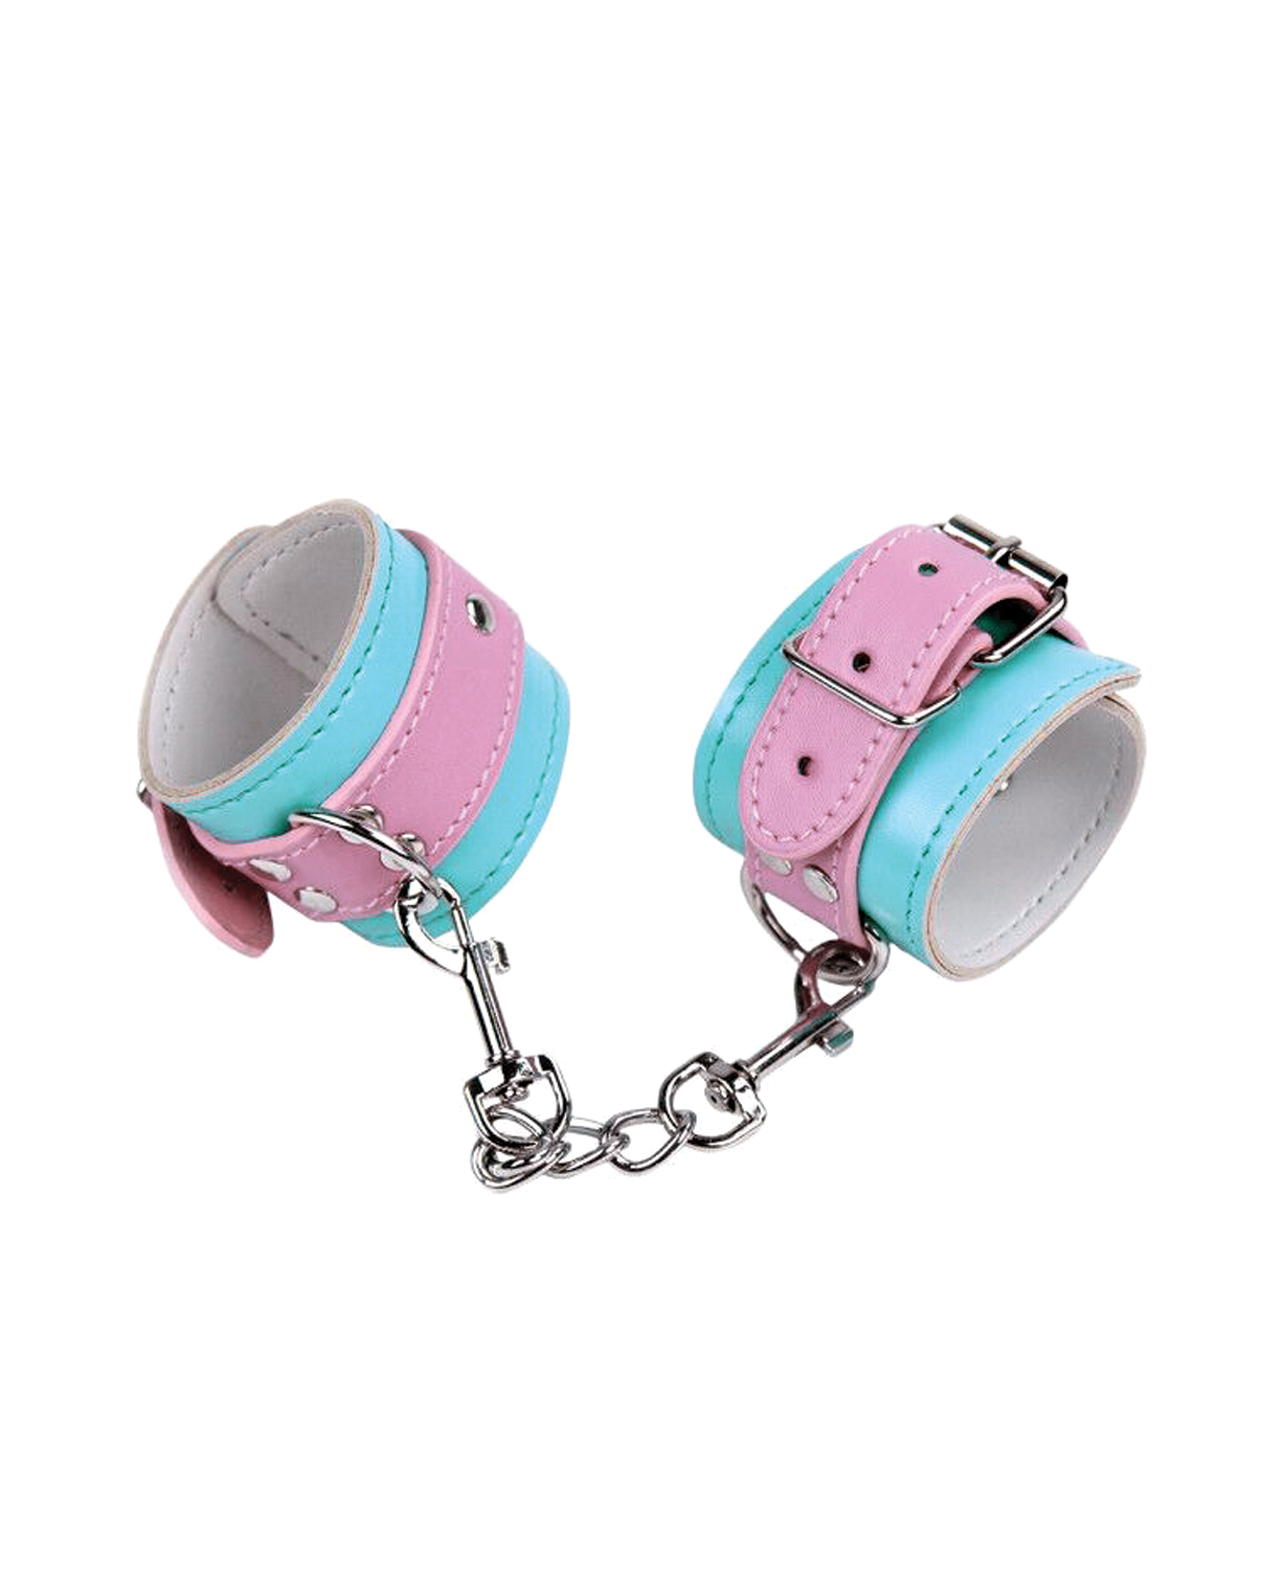 Nobu Fetish Handcuffs – Pink/Blue